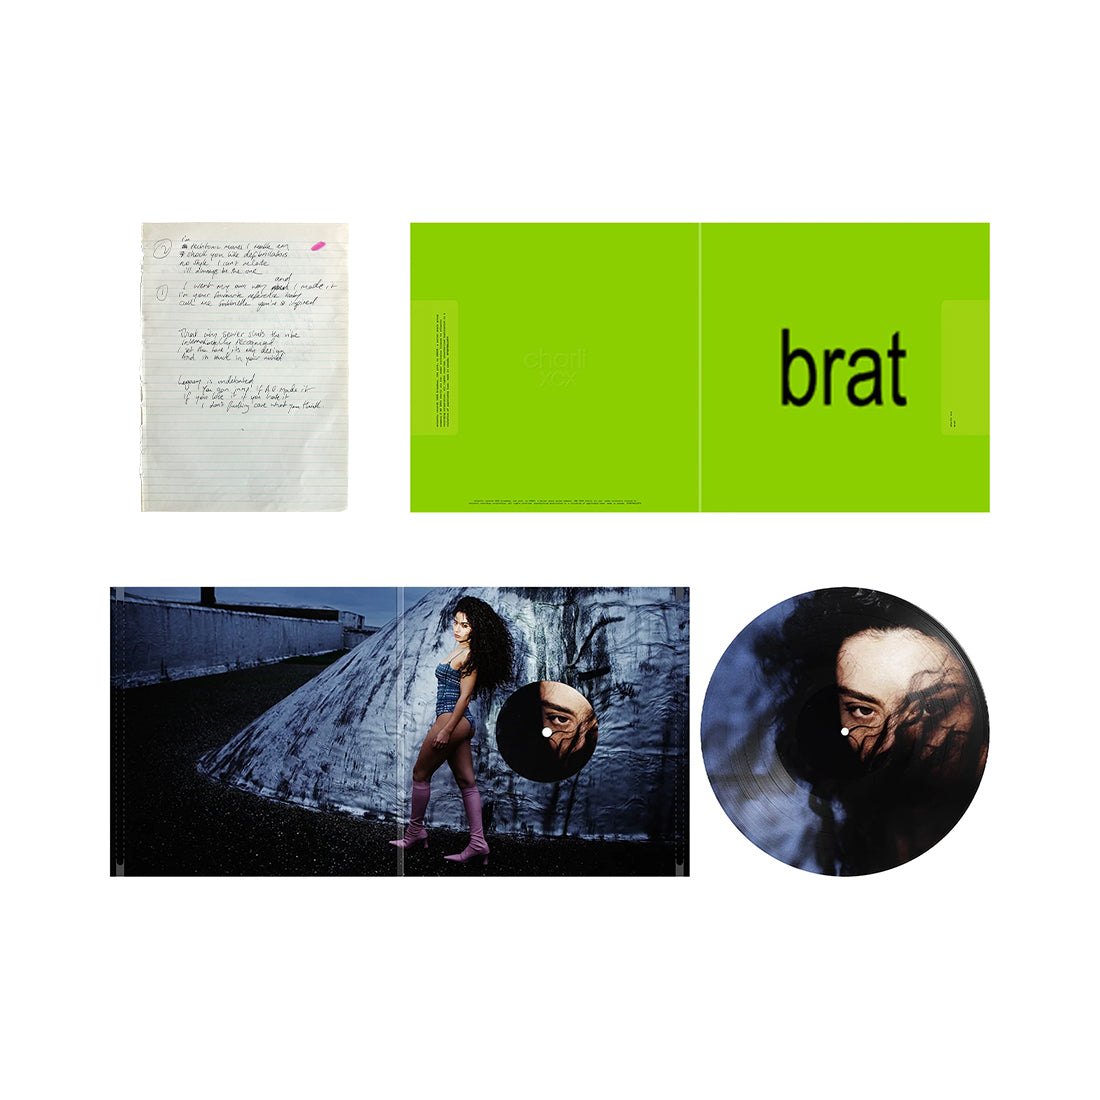 BRAT (diary entry edition)